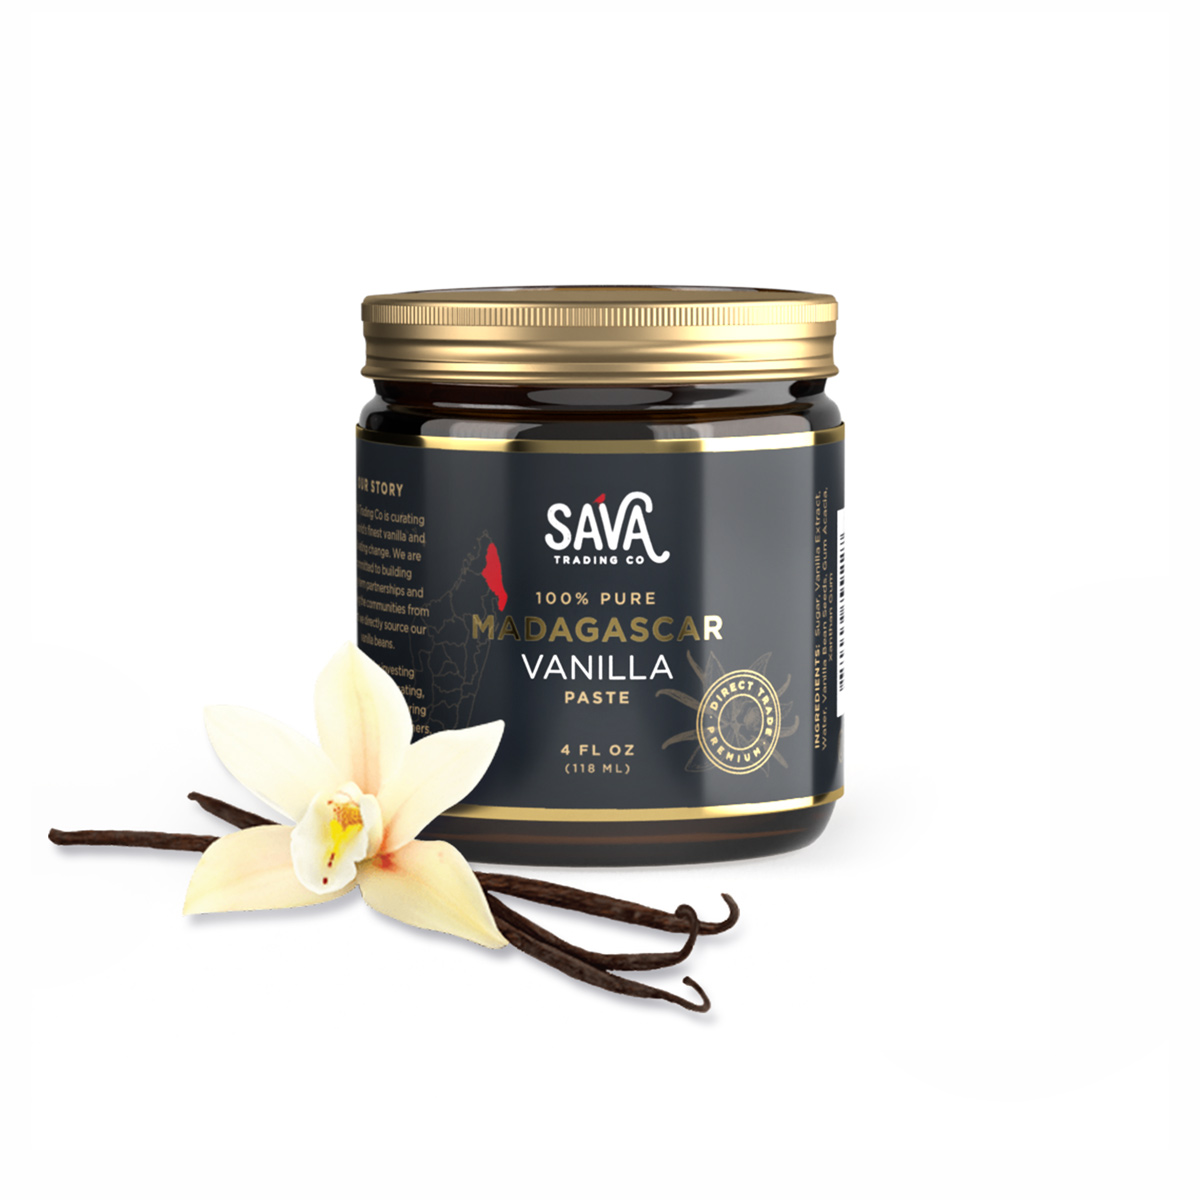 SAVA-Trading-Co-Madagascar-Vanilla-Paste-4oz